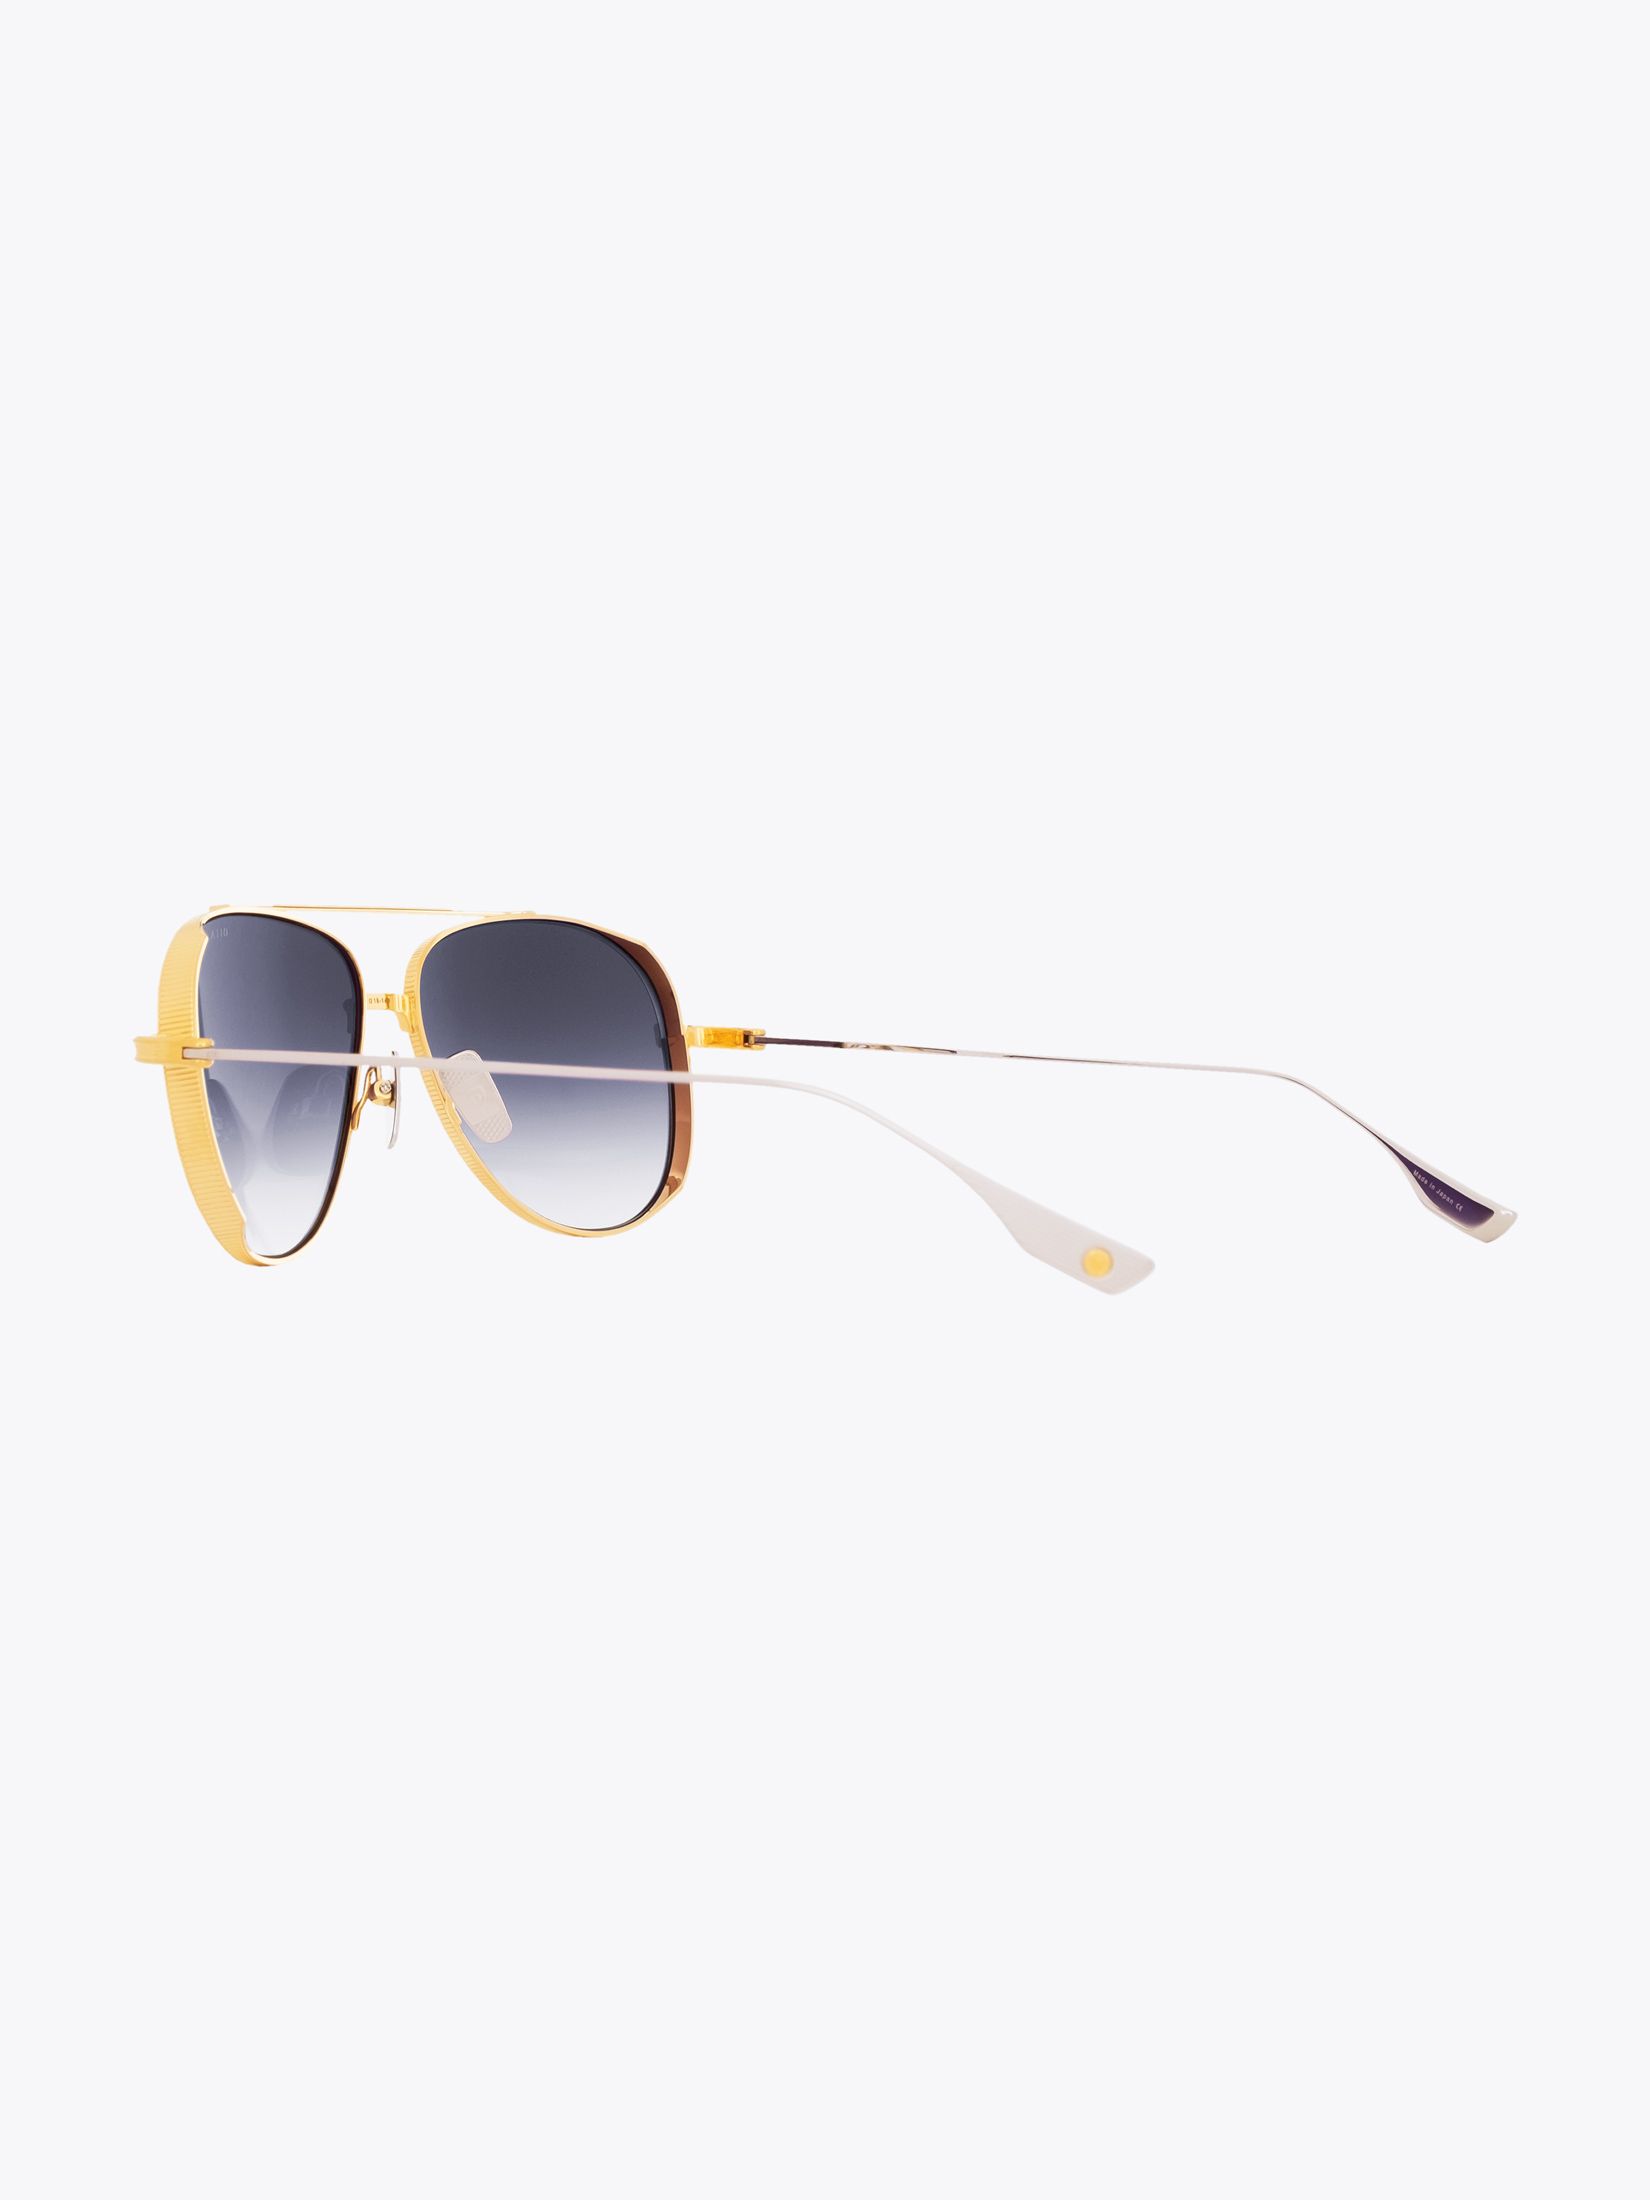 Dita Subsystem (DTS141) - Yellow Gold Sunglasses - E35 Shop